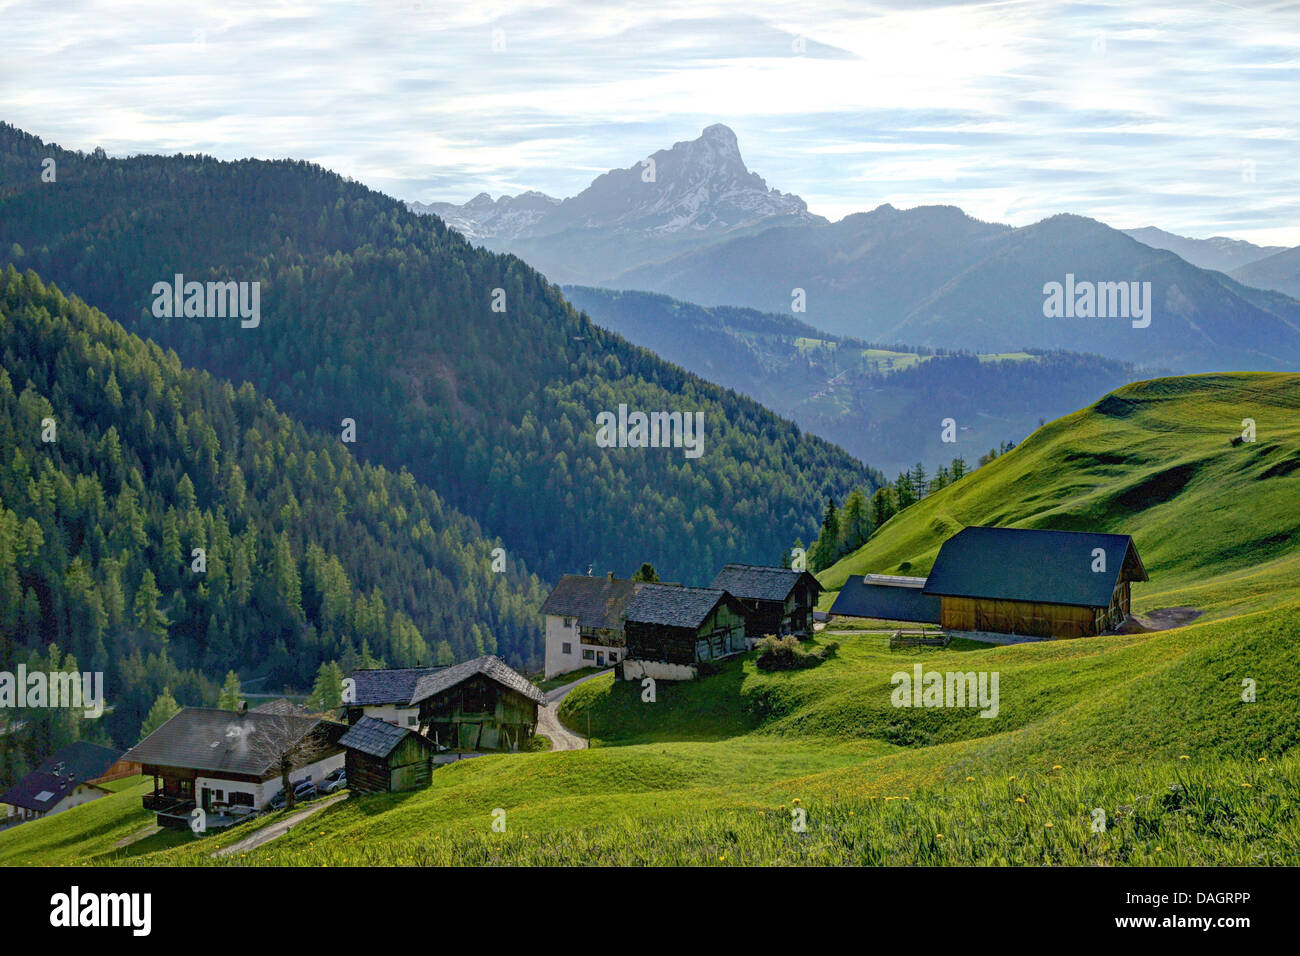 hamlet on mountain slope, Peitlerkofel in background, Italy, South Tyrol, Dolomites Stock Photo